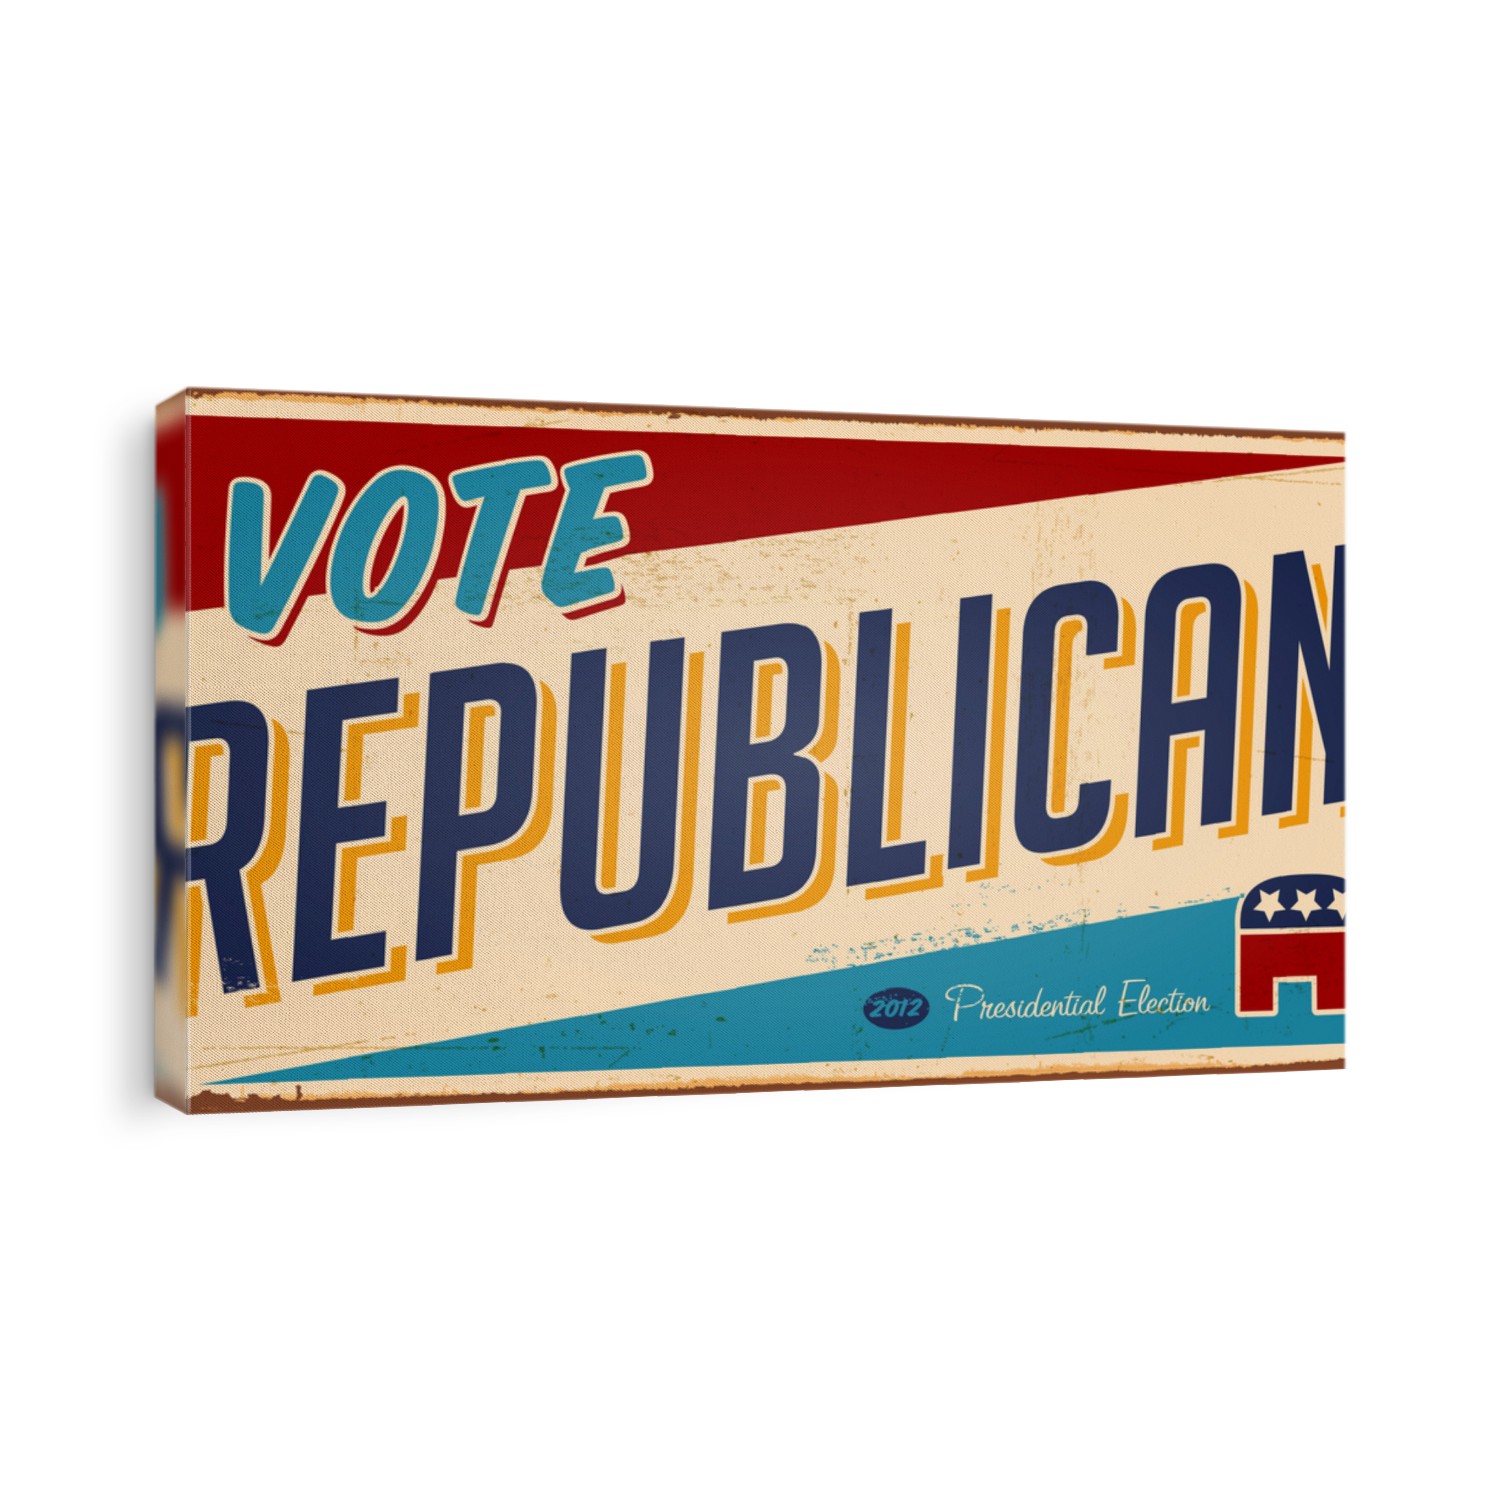 Vintage Vote Republican metal sign - Raster version.